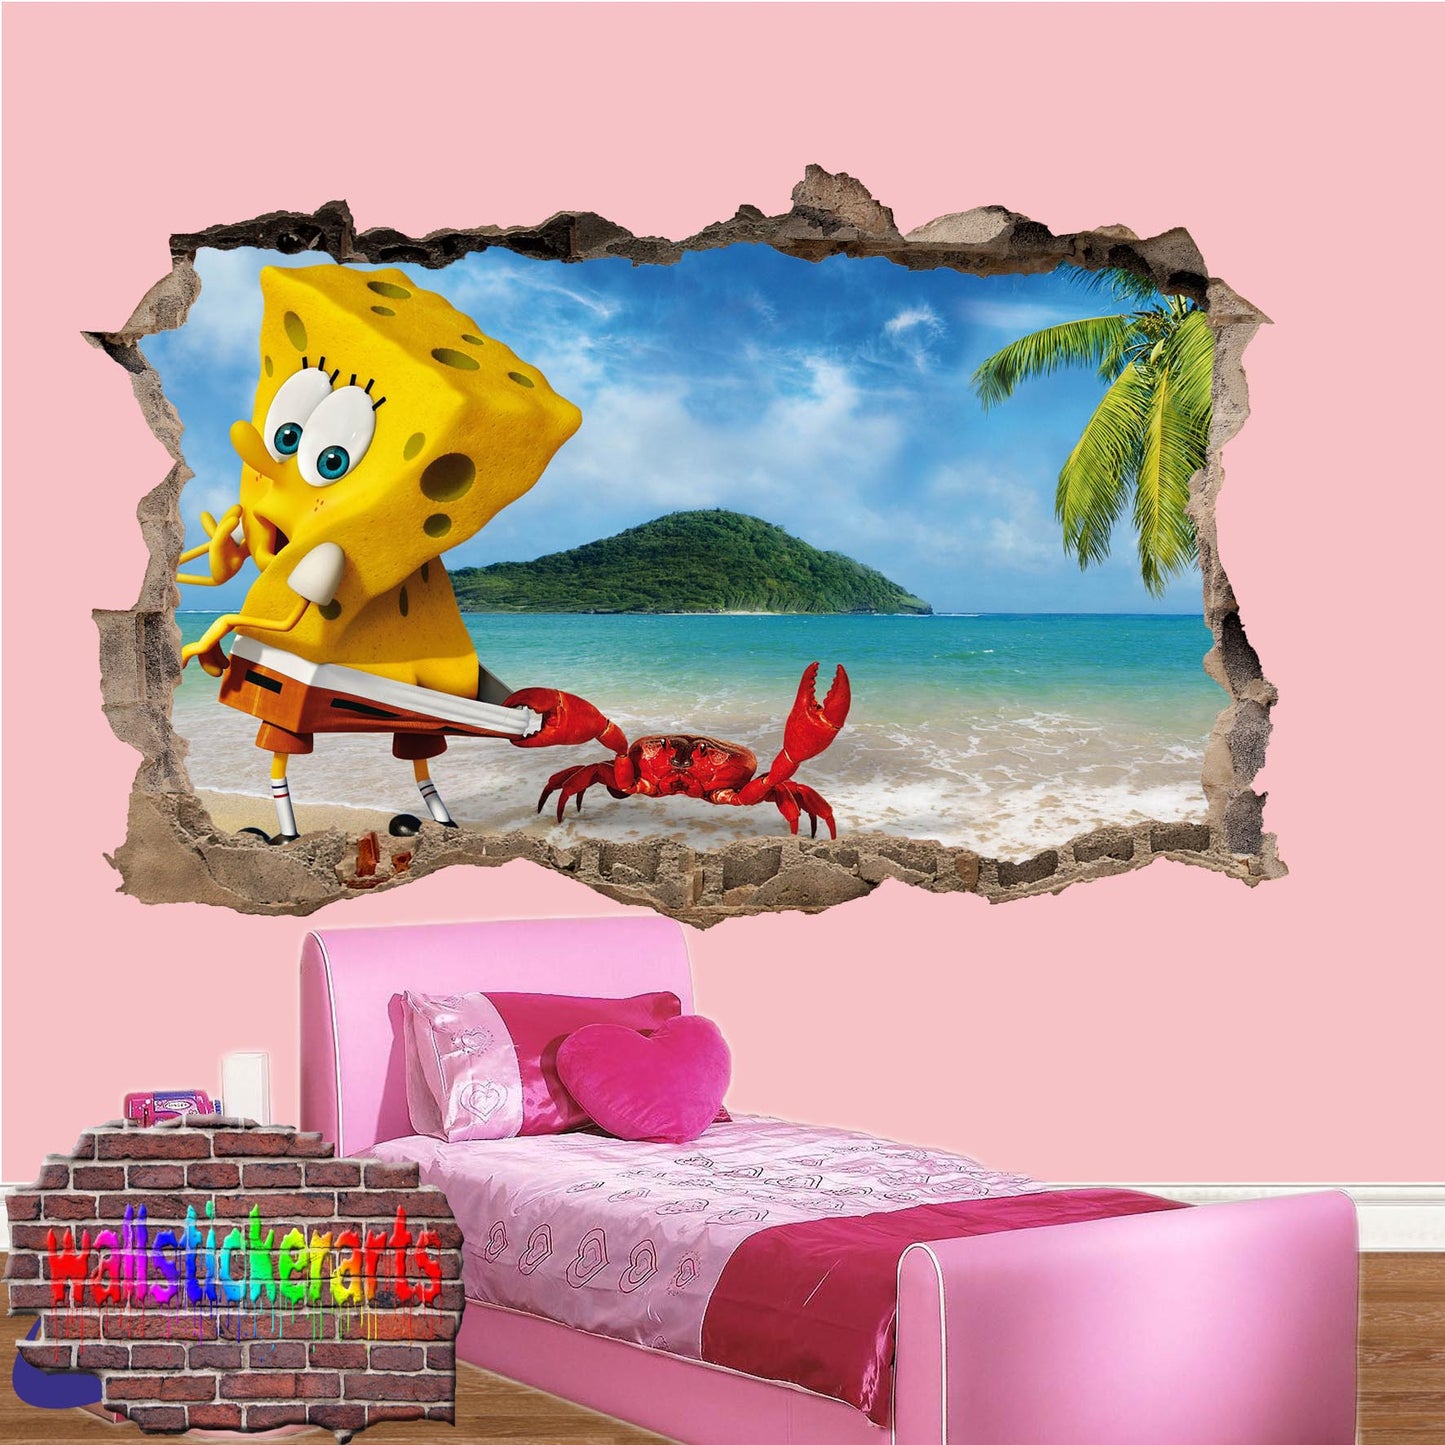 Spongebob Square Pants Cartoon Characters 3d Art Wall Sticker Room Nursery Shop Decor Decal Mural